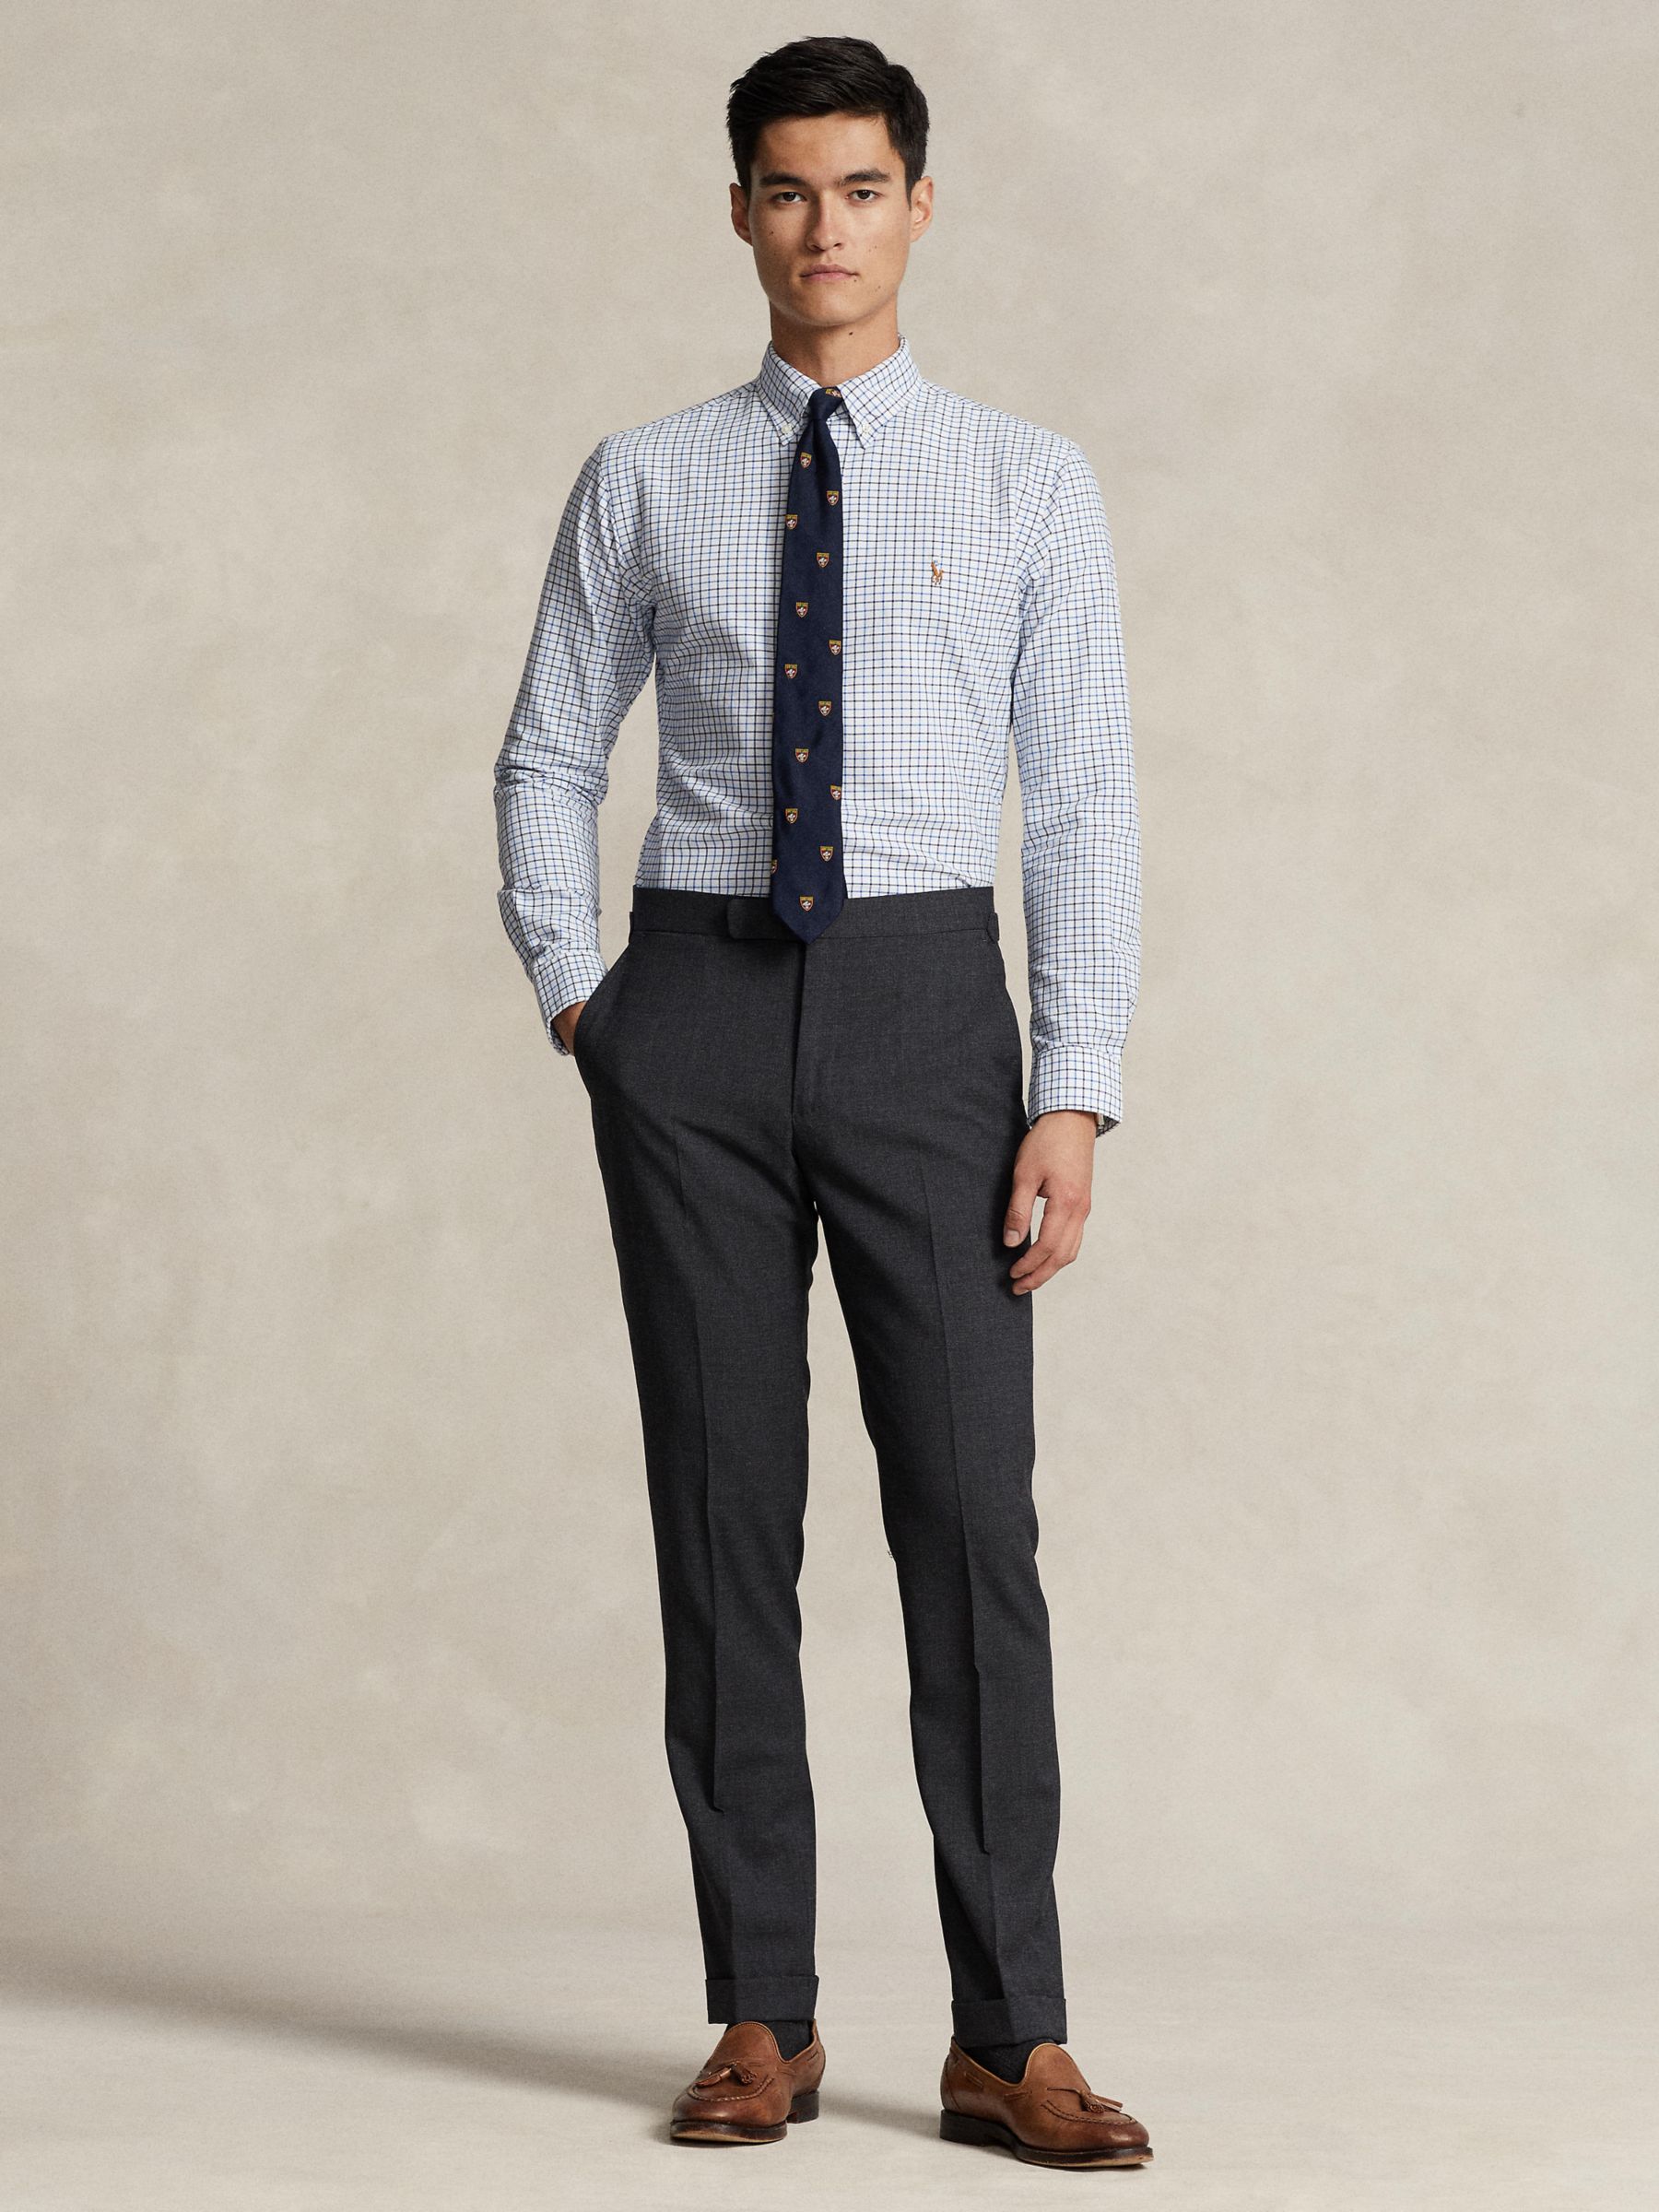 Ralph Lauren Tailored Fit Tattersall Oxford Check Shirt, White/Blue, XL